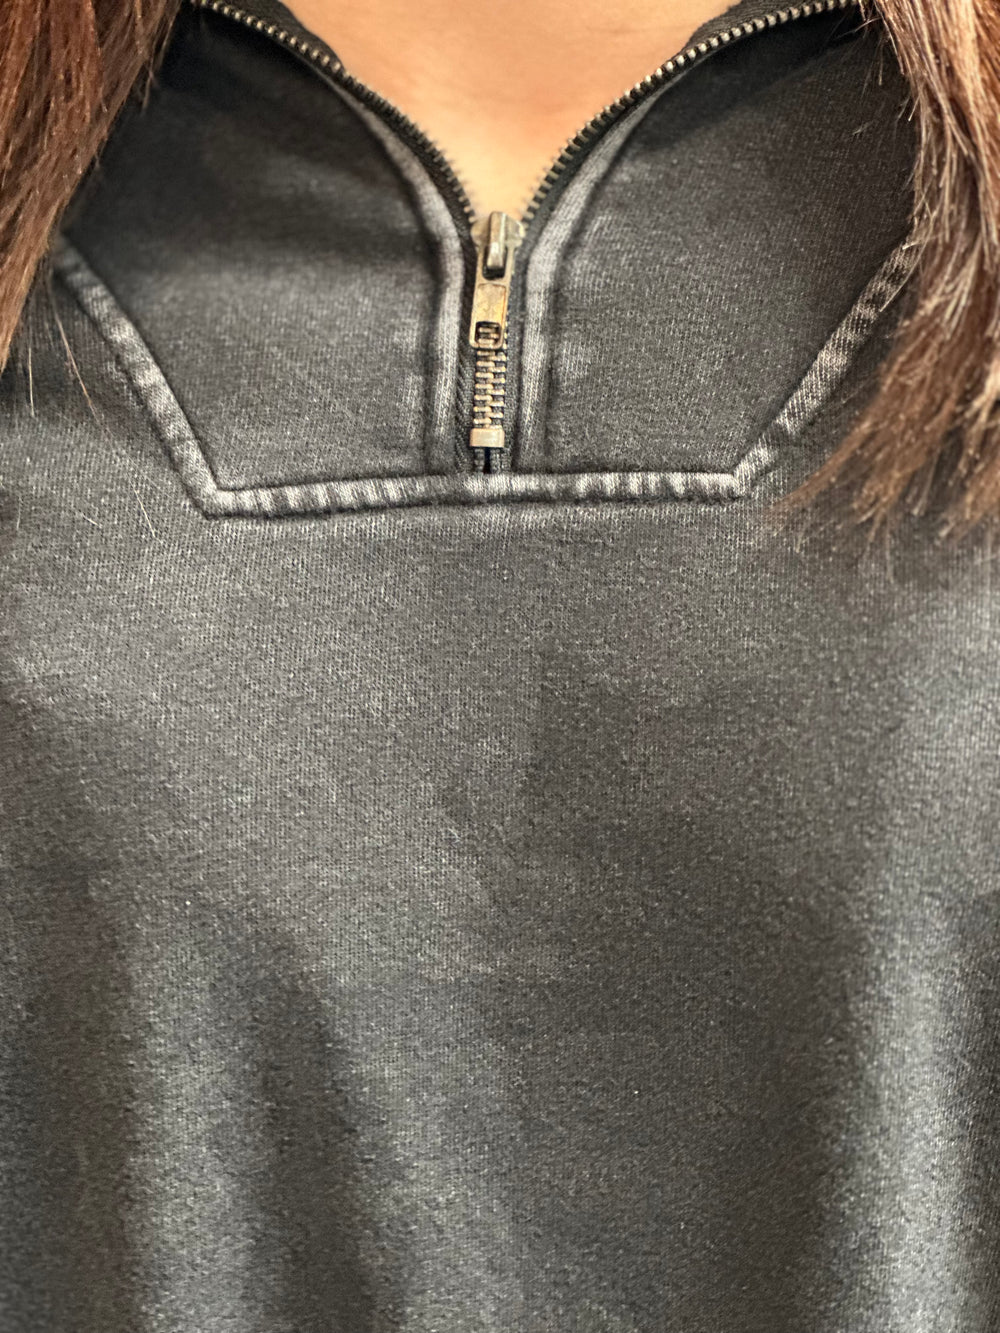 Chic Take Cropped Long Sleeve Sweatshirt-Sweatshirts-Hyfve-Evergreen Boutique, Women’s Fashion Boutique in Santa Claus, Indiana